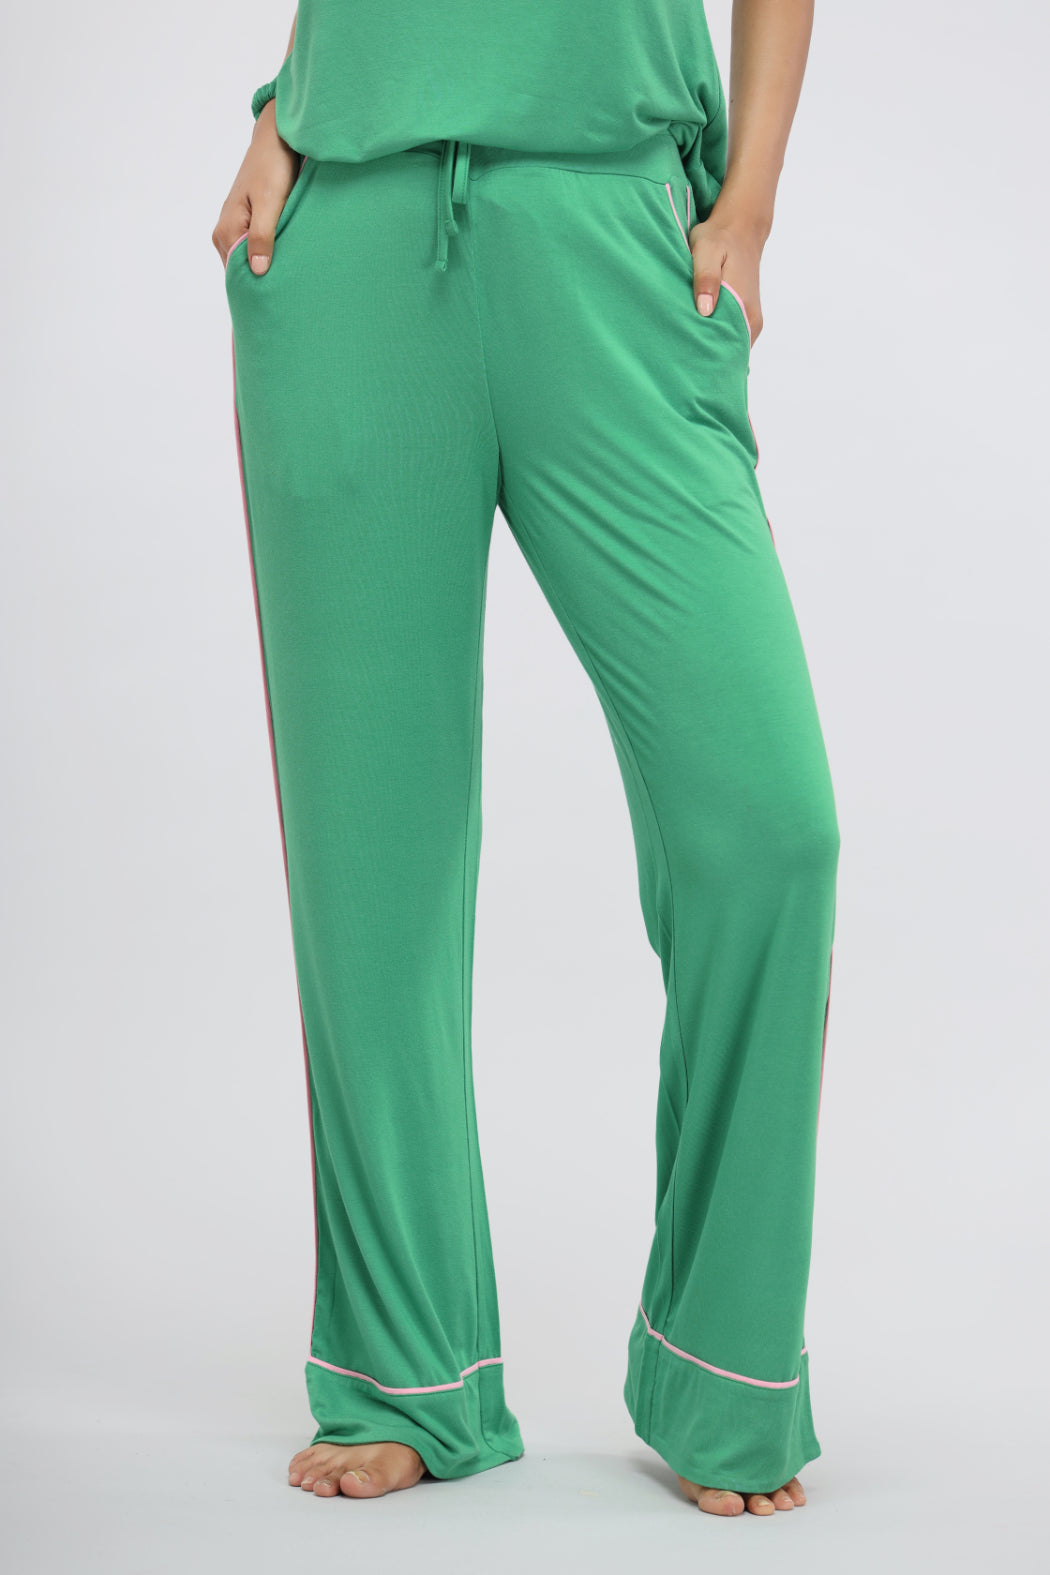 Green Bee Piping Full Sleeve Modal Pajama Set